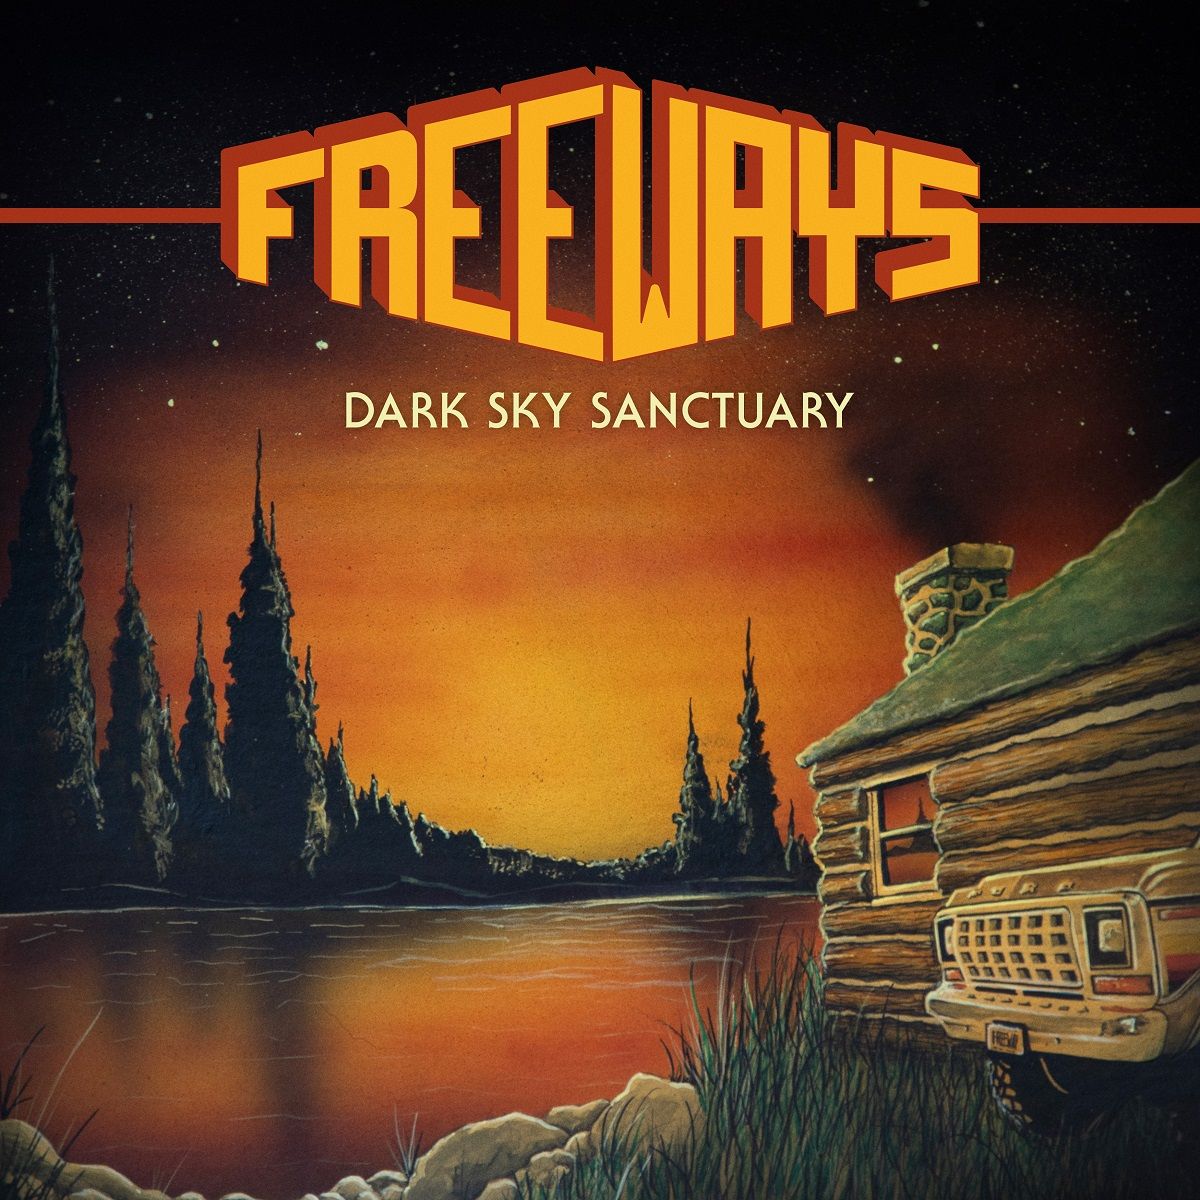 Freeways - "Dark Sky Sanctuary"